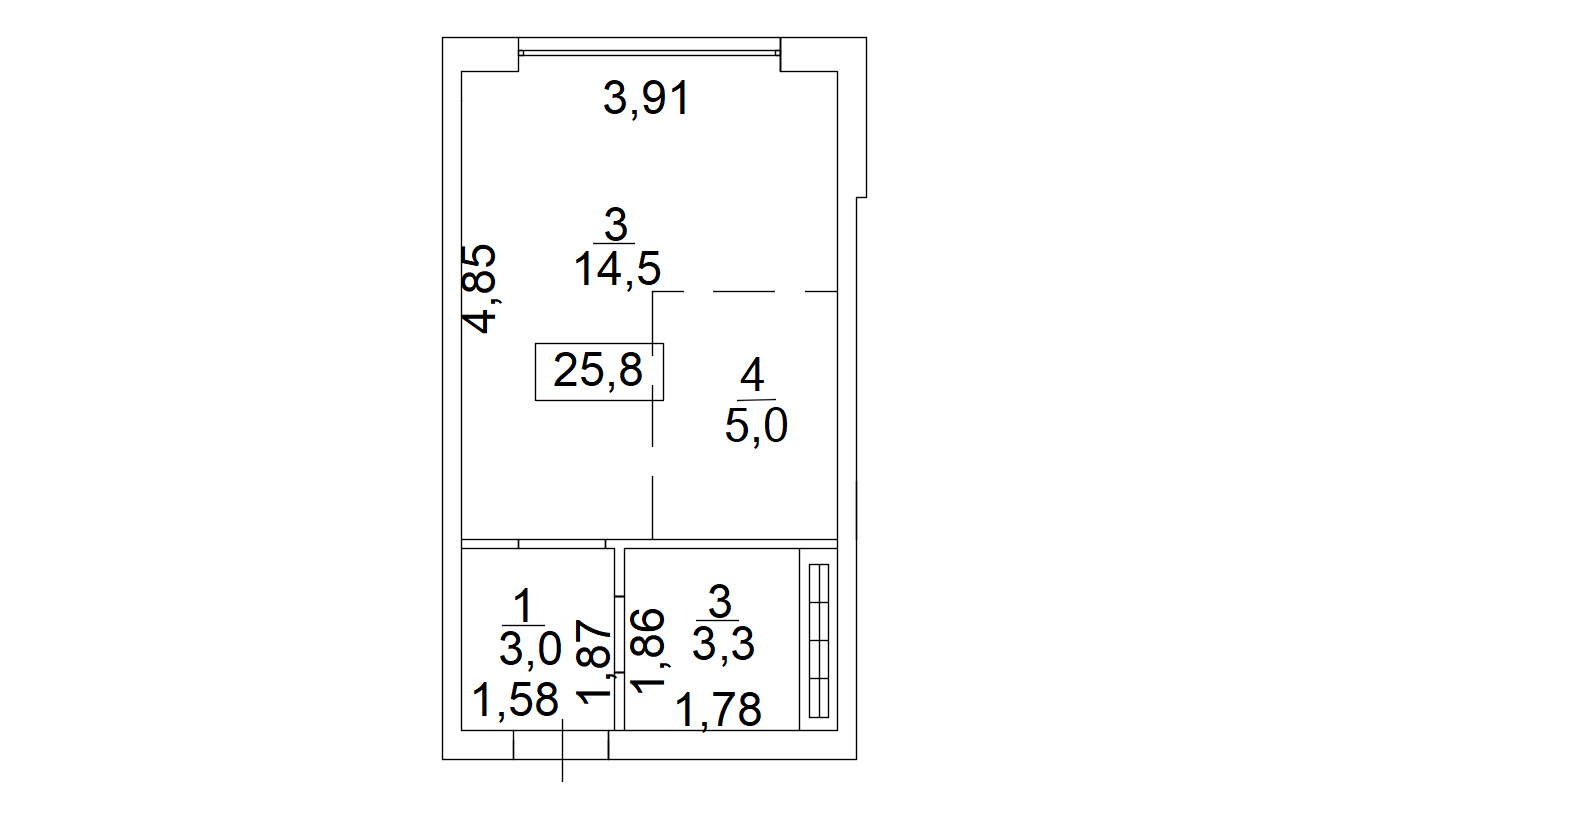 Planning Smart flats area 25.8m2, AB-02-07/00007.